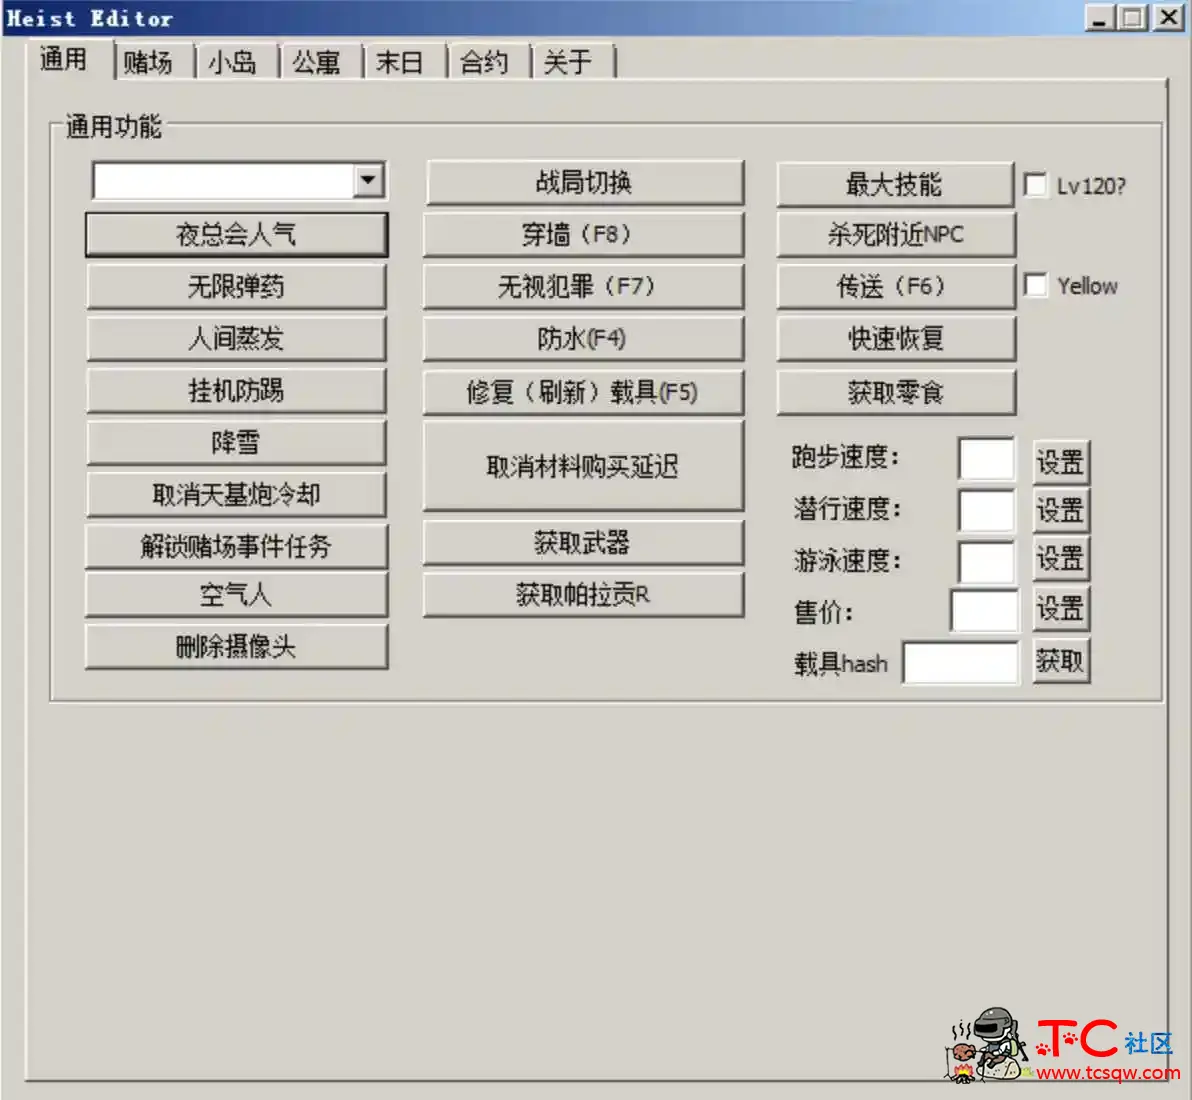 GTA5 Heist Editor外部抢劫编辑器 v3.5.7 屠城辅助网www.tcfz1.com6204